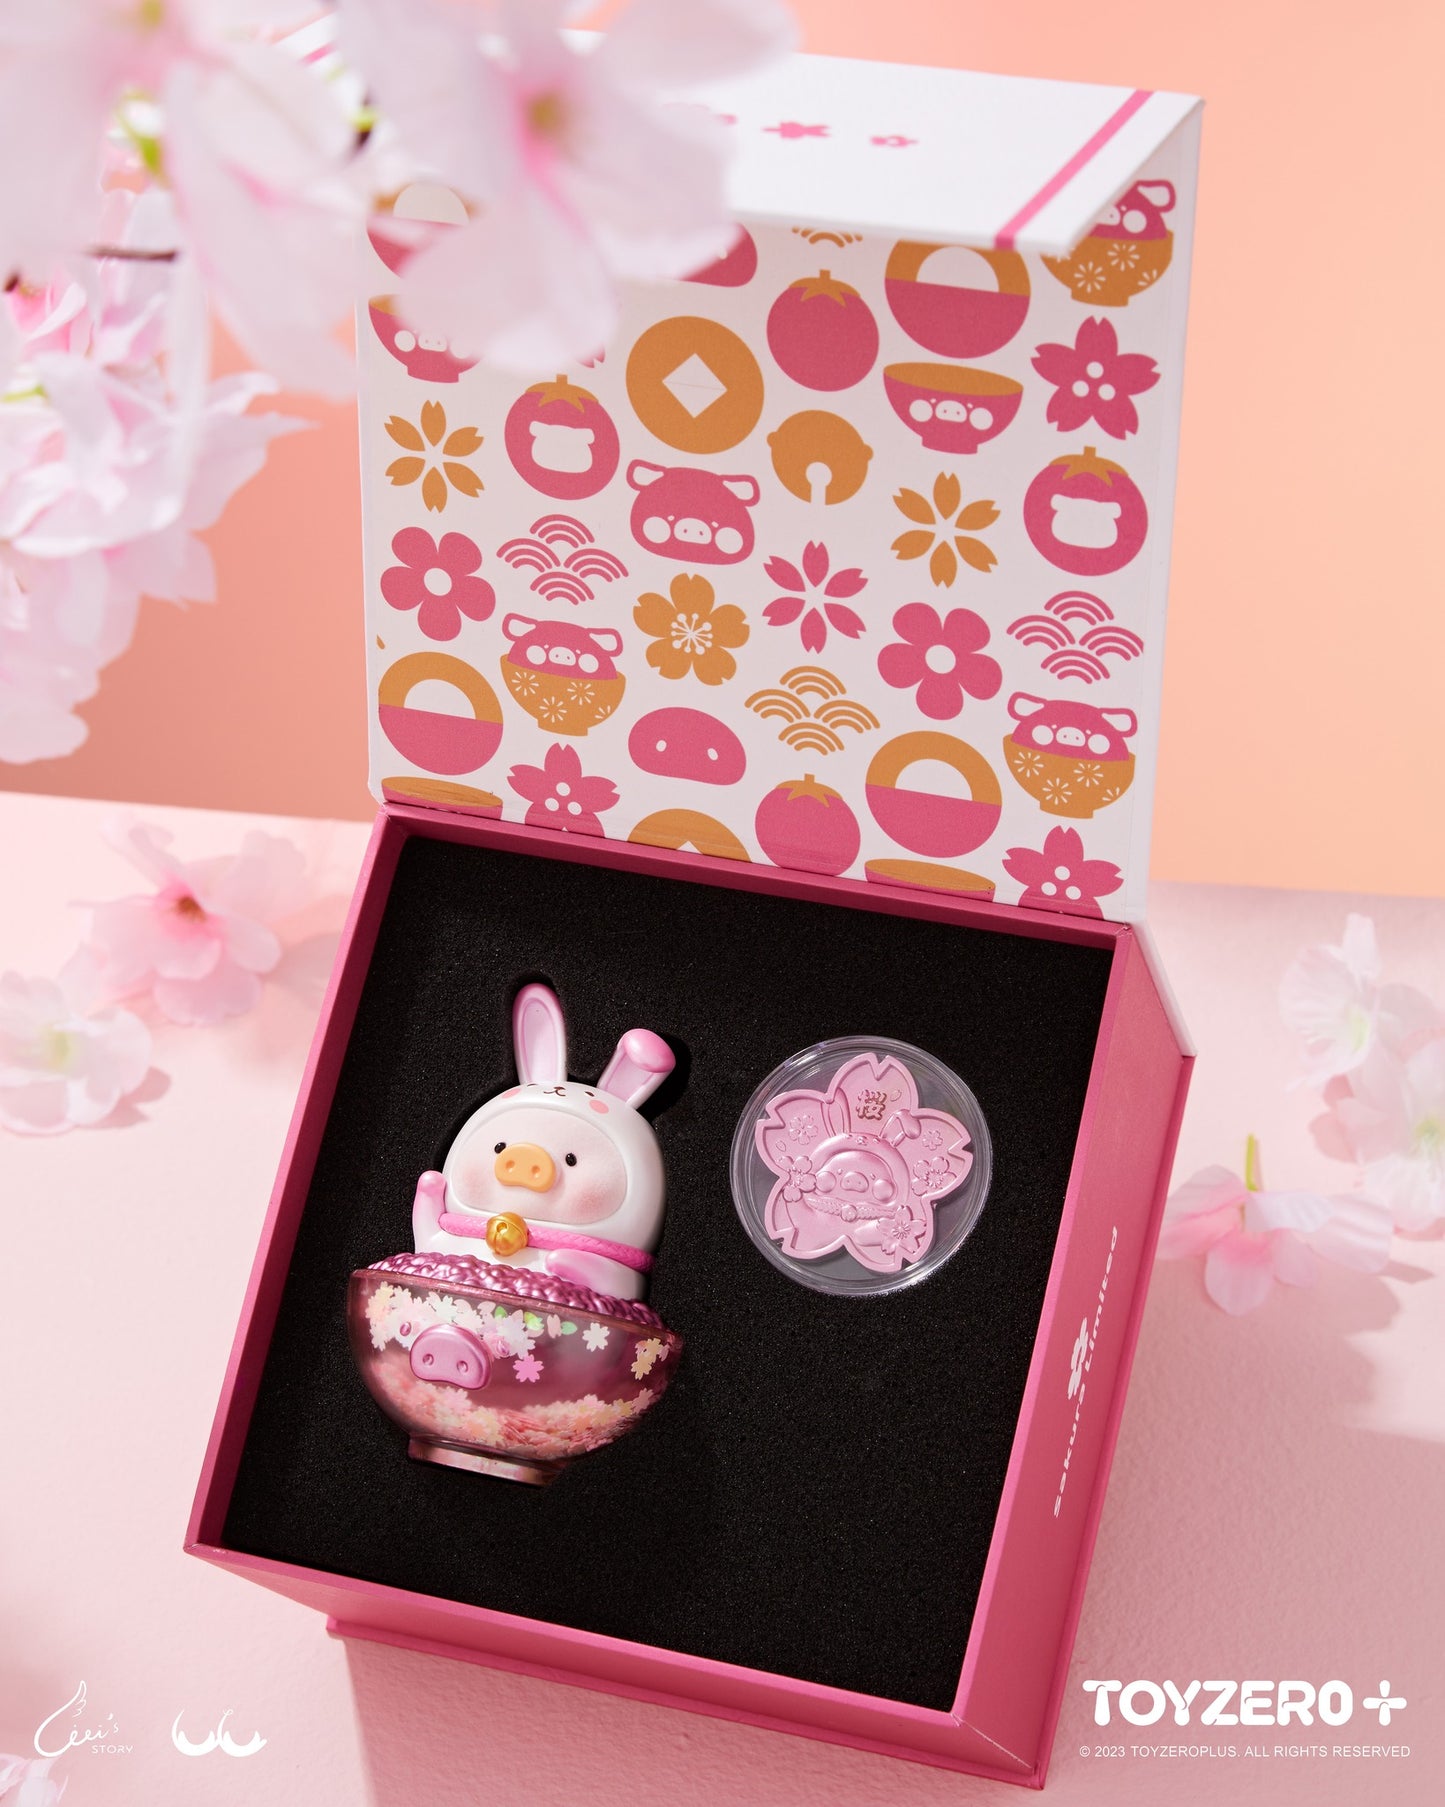 [Exclusive] 罐頭豬LuLu 衣食無憂金飯碗 - 櫻花限定款 LuLu the Piggy Rabbit Golden Bowl - Sakura Edition